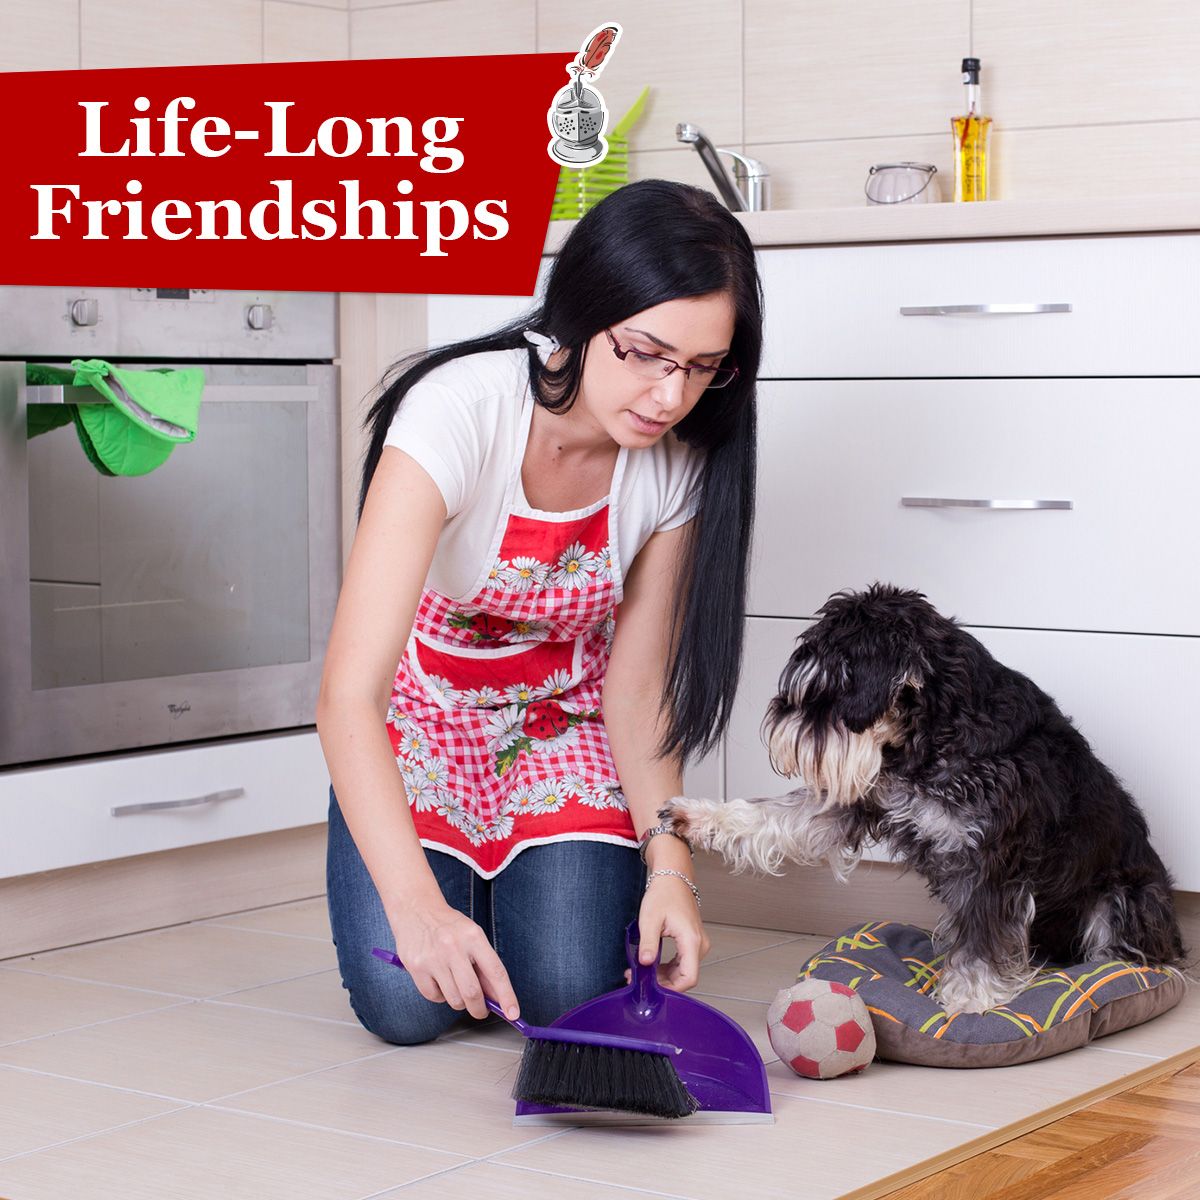 Life-Long Friendships